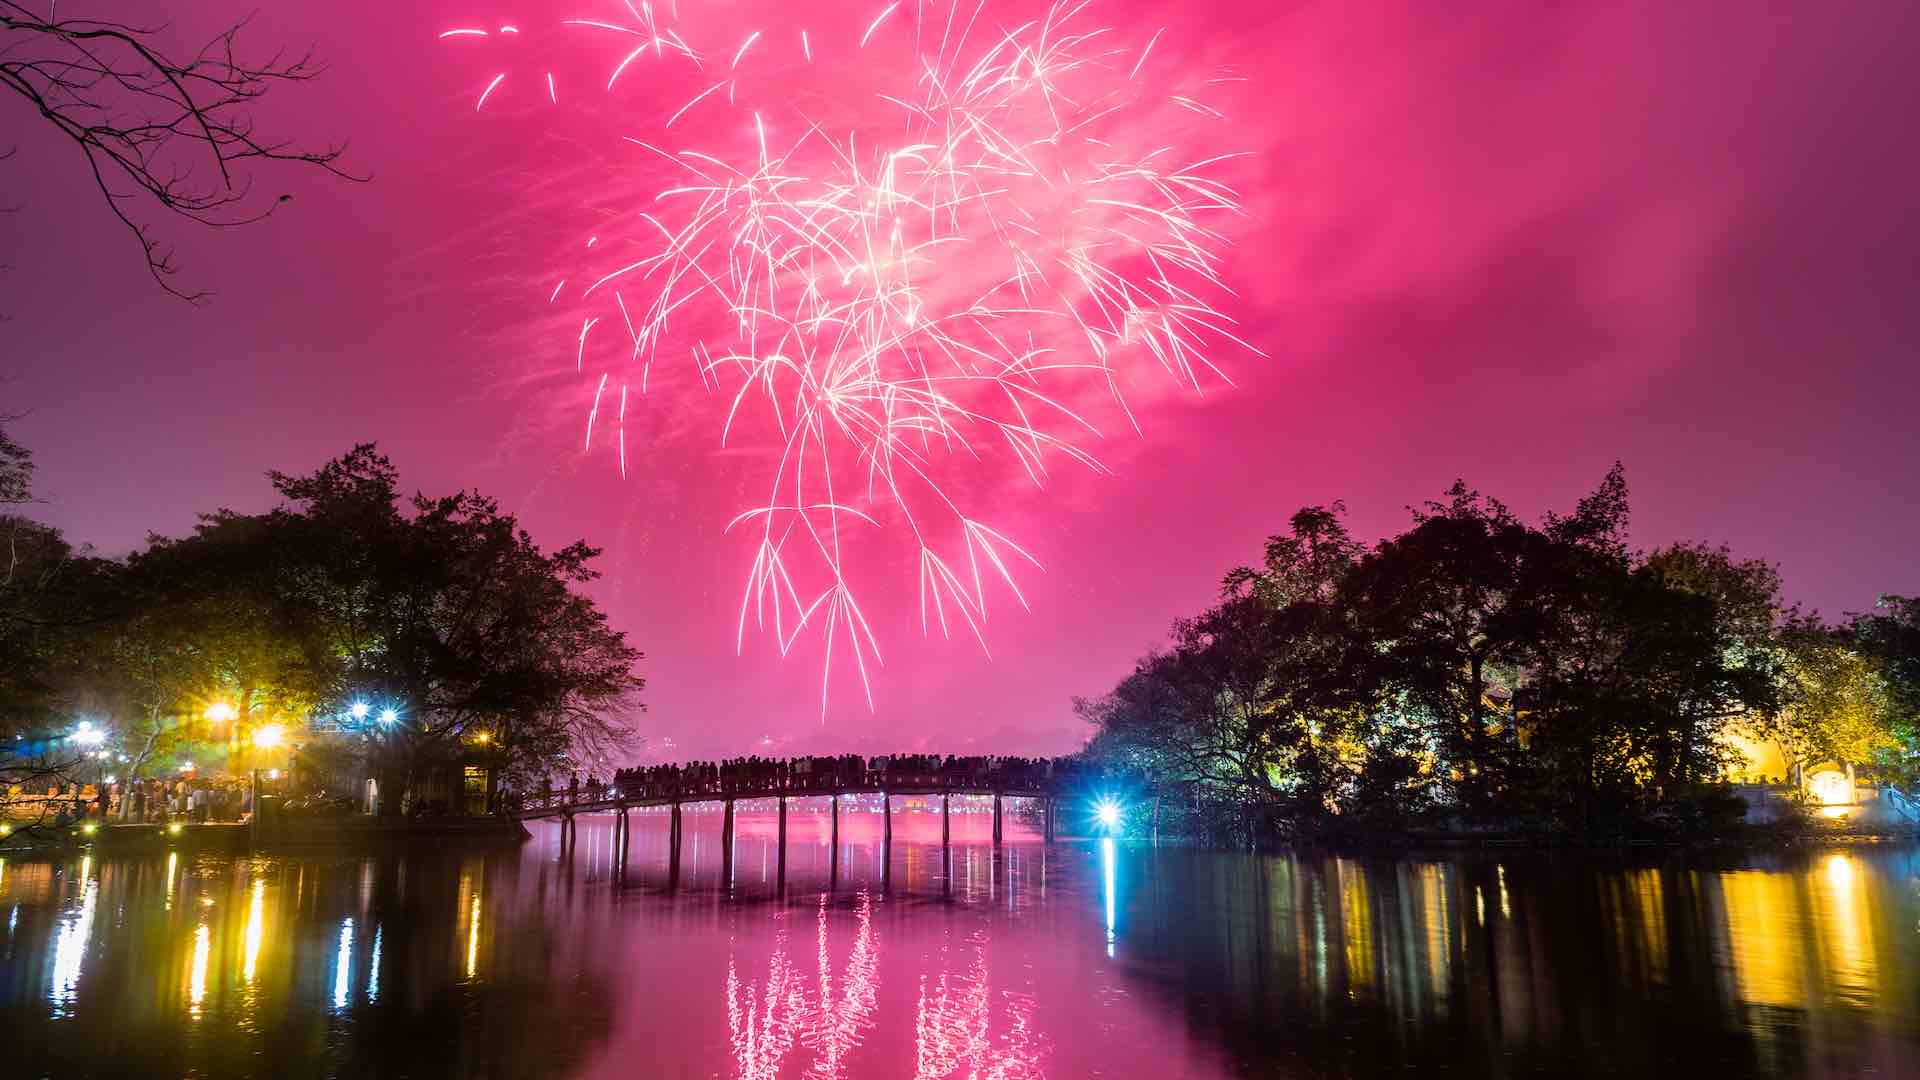 Fireworks light up the night in Vietnam